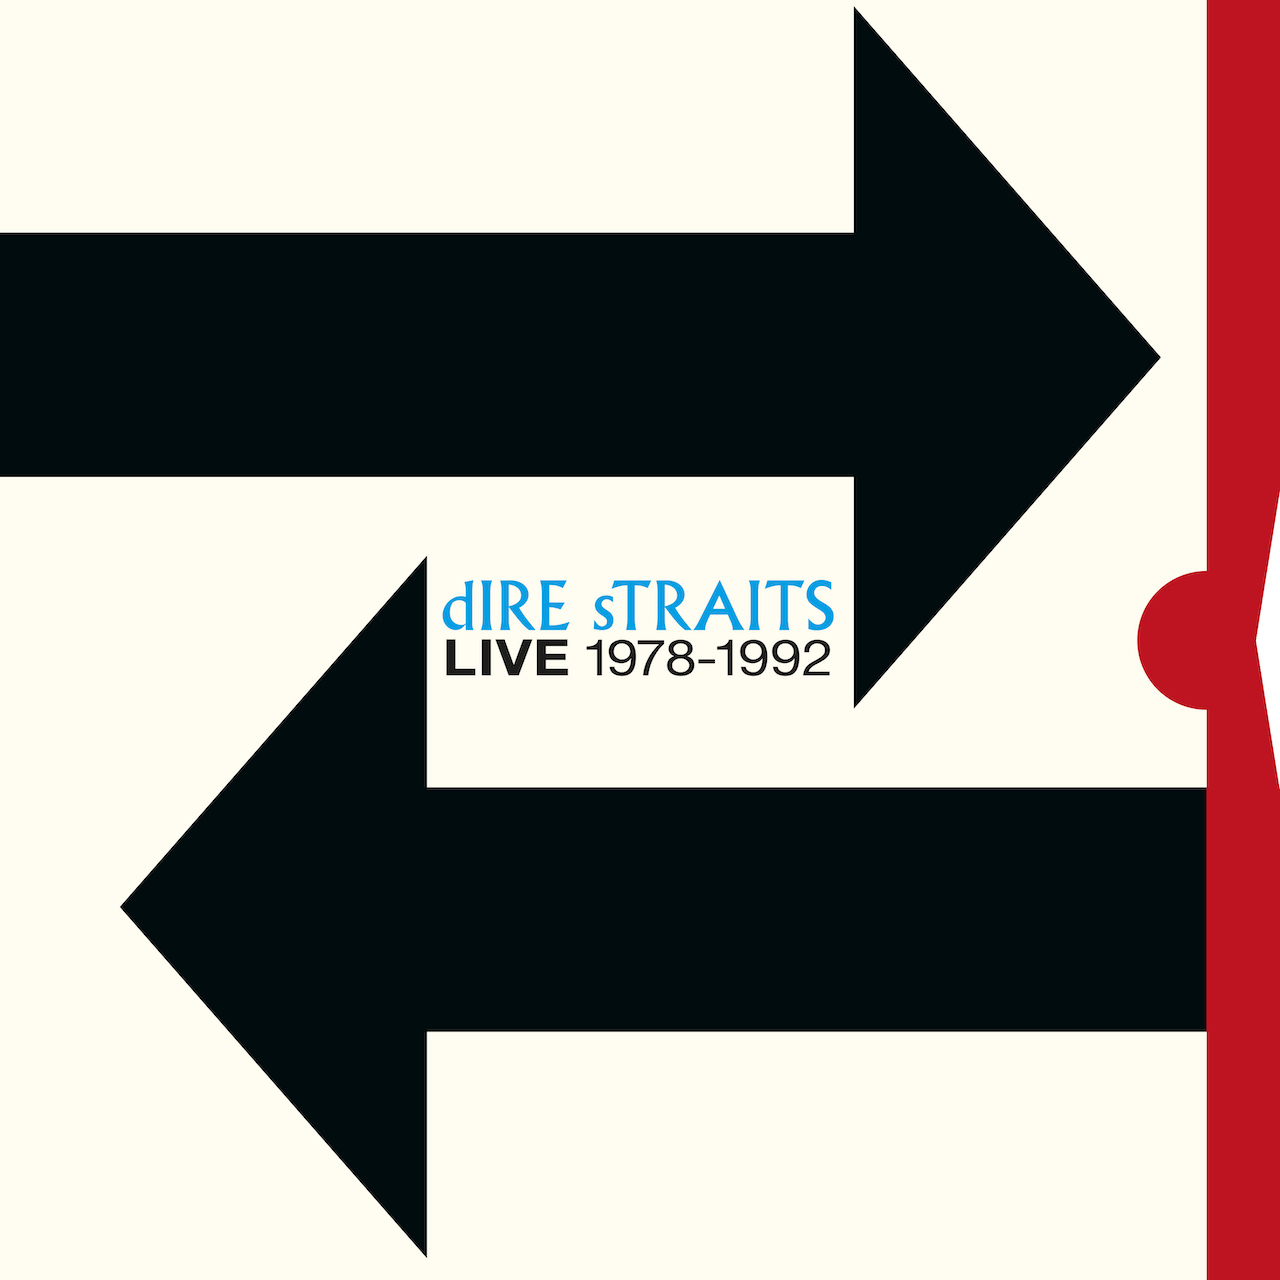 Dire Straits – Live 1978-1992